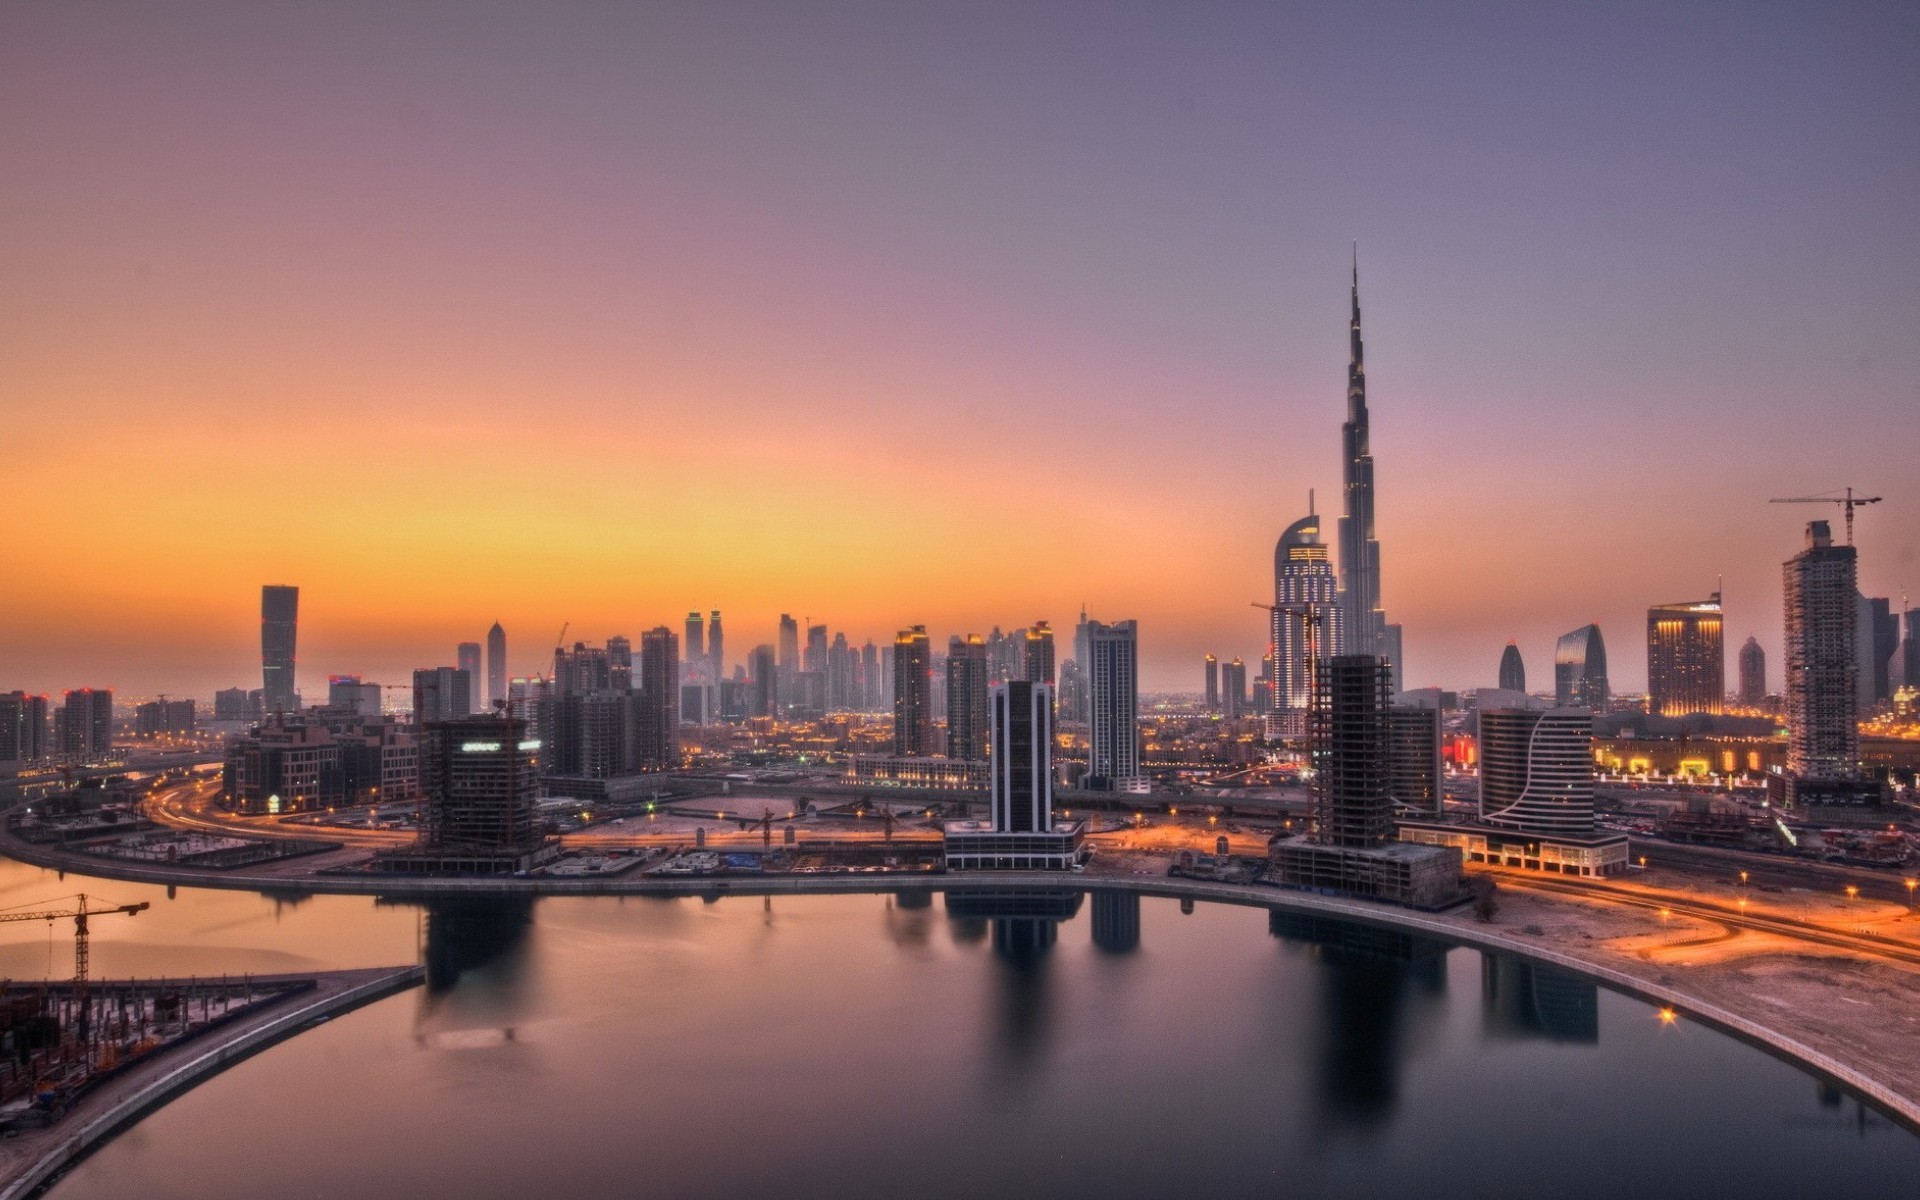 burj khalifa, dubai, united arab emirates, man made, city, cityscape, emirates, river, skyscraper, sunset, cities